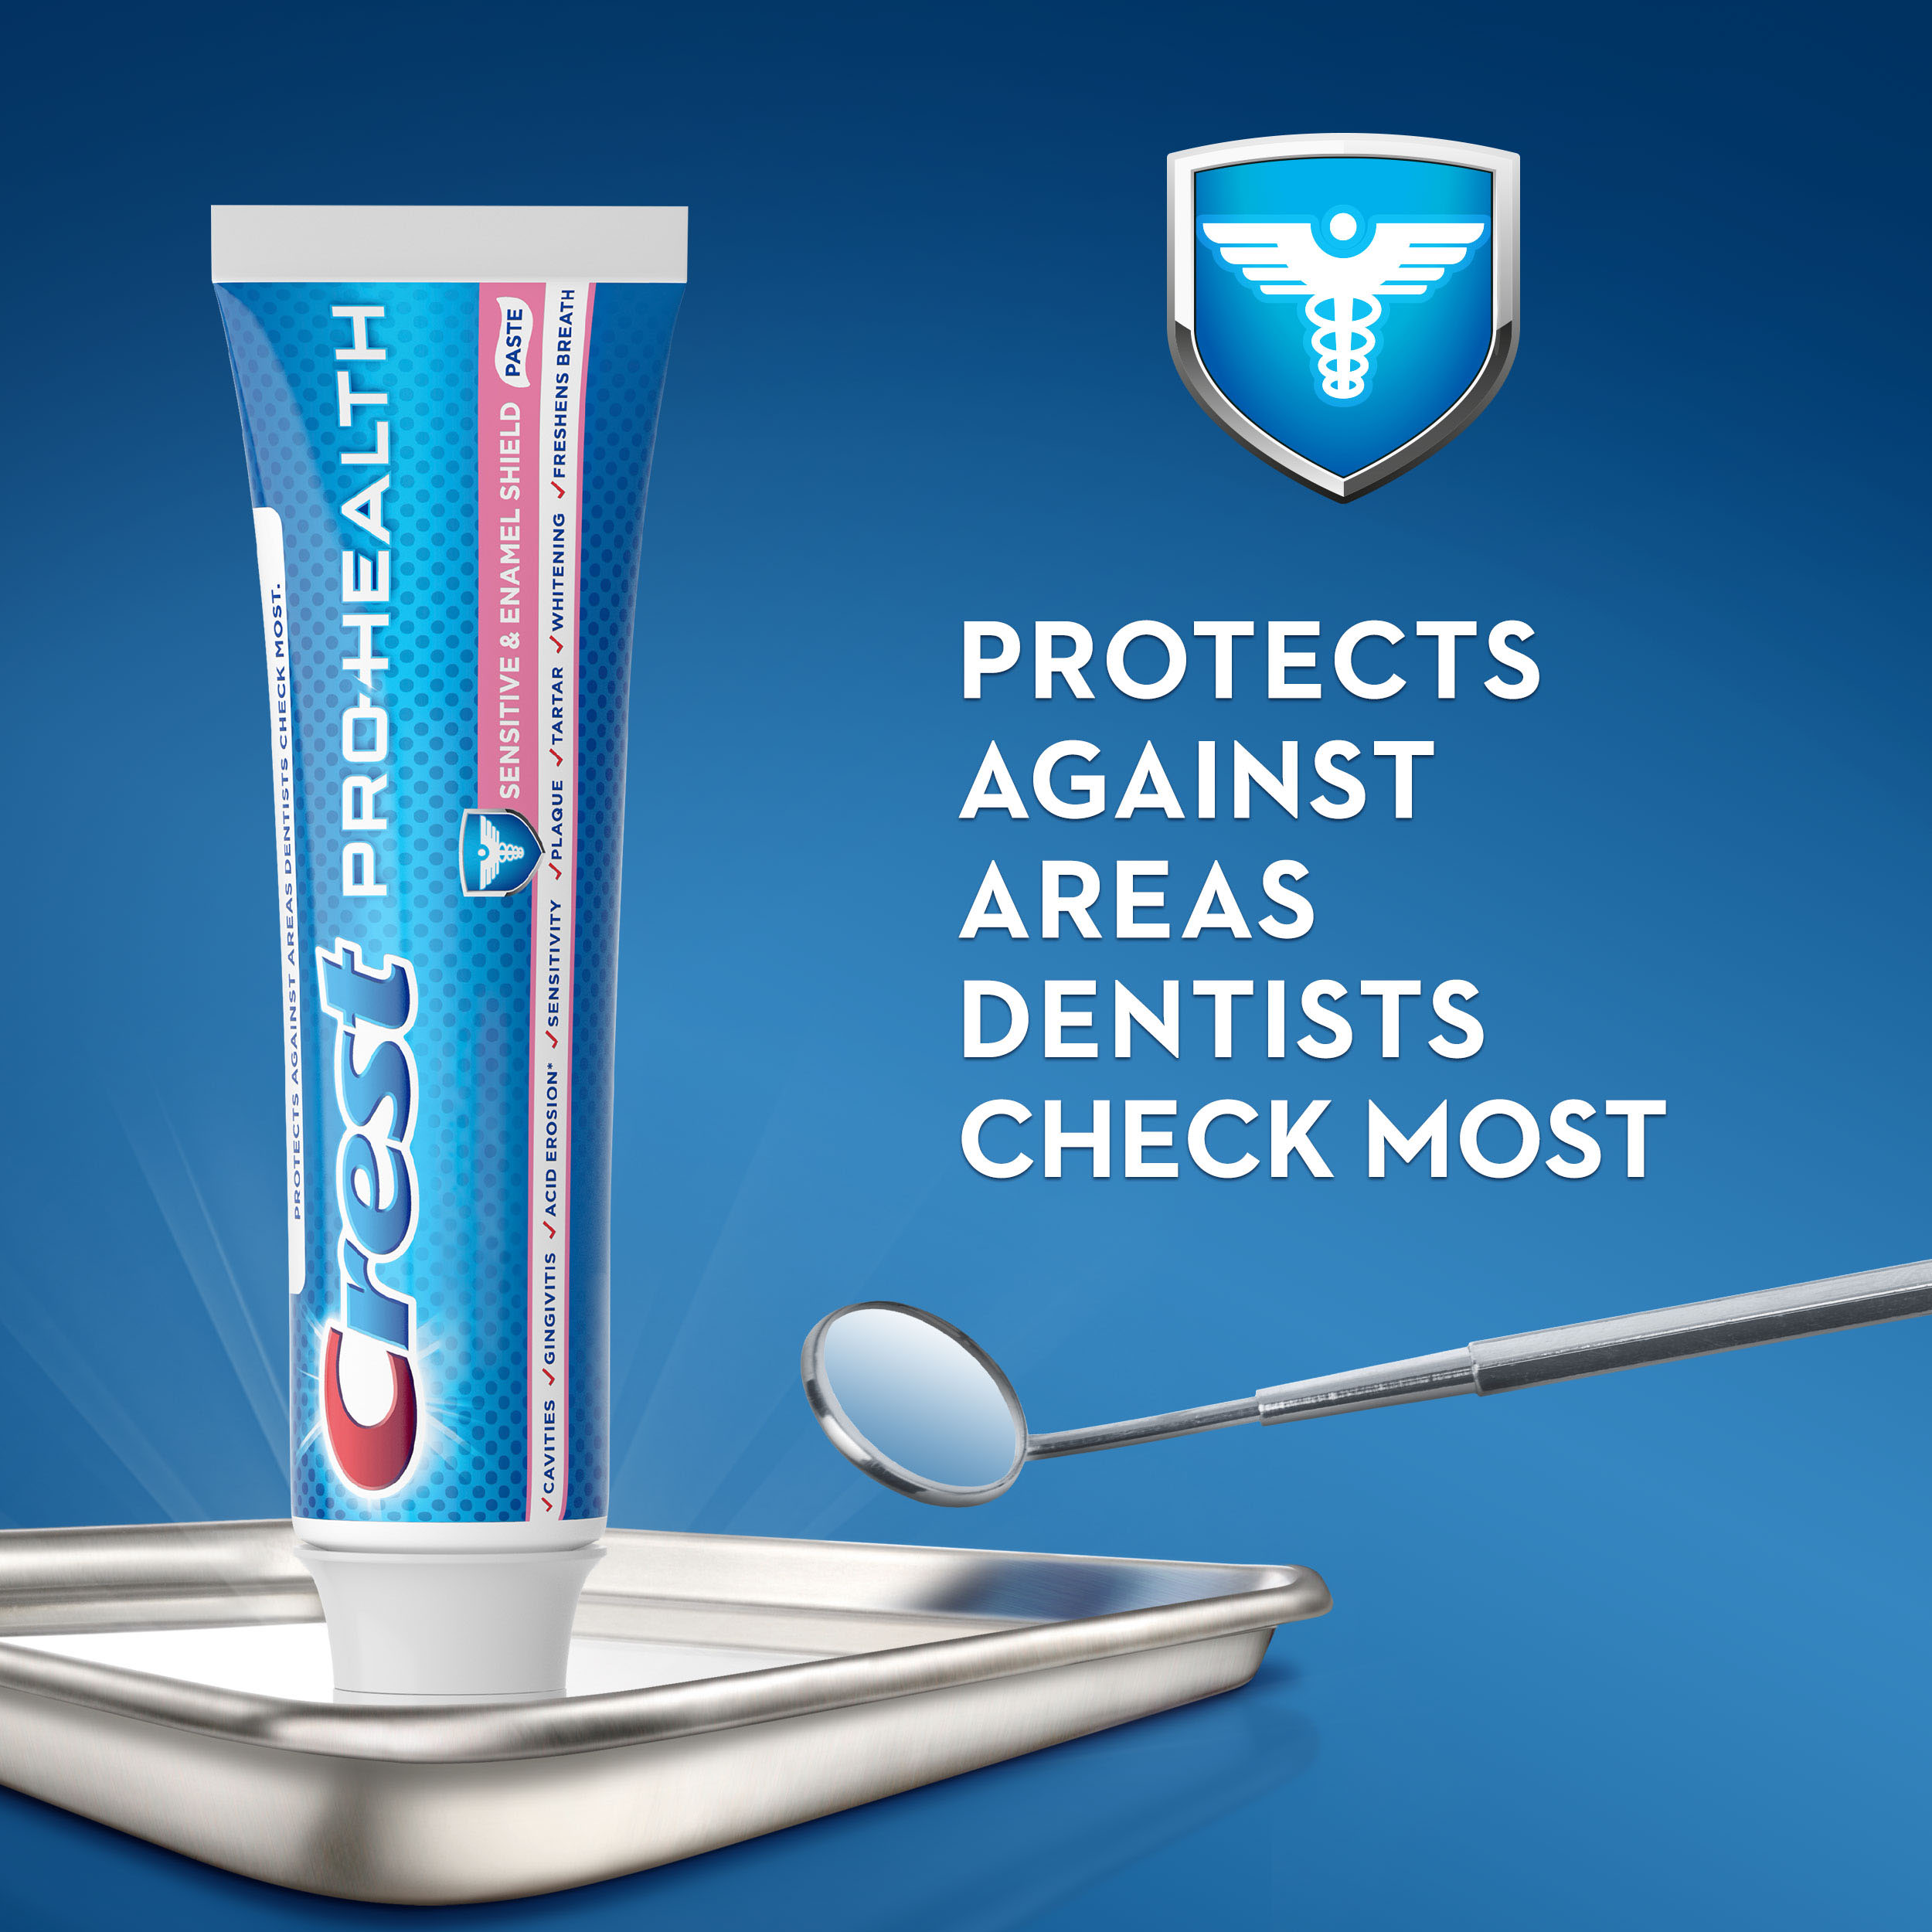 Crest Pro Health Sensitive, Enamel Shield Toothpaste, Mint, 4.6 oz, 2 Pk - image 4 of 6